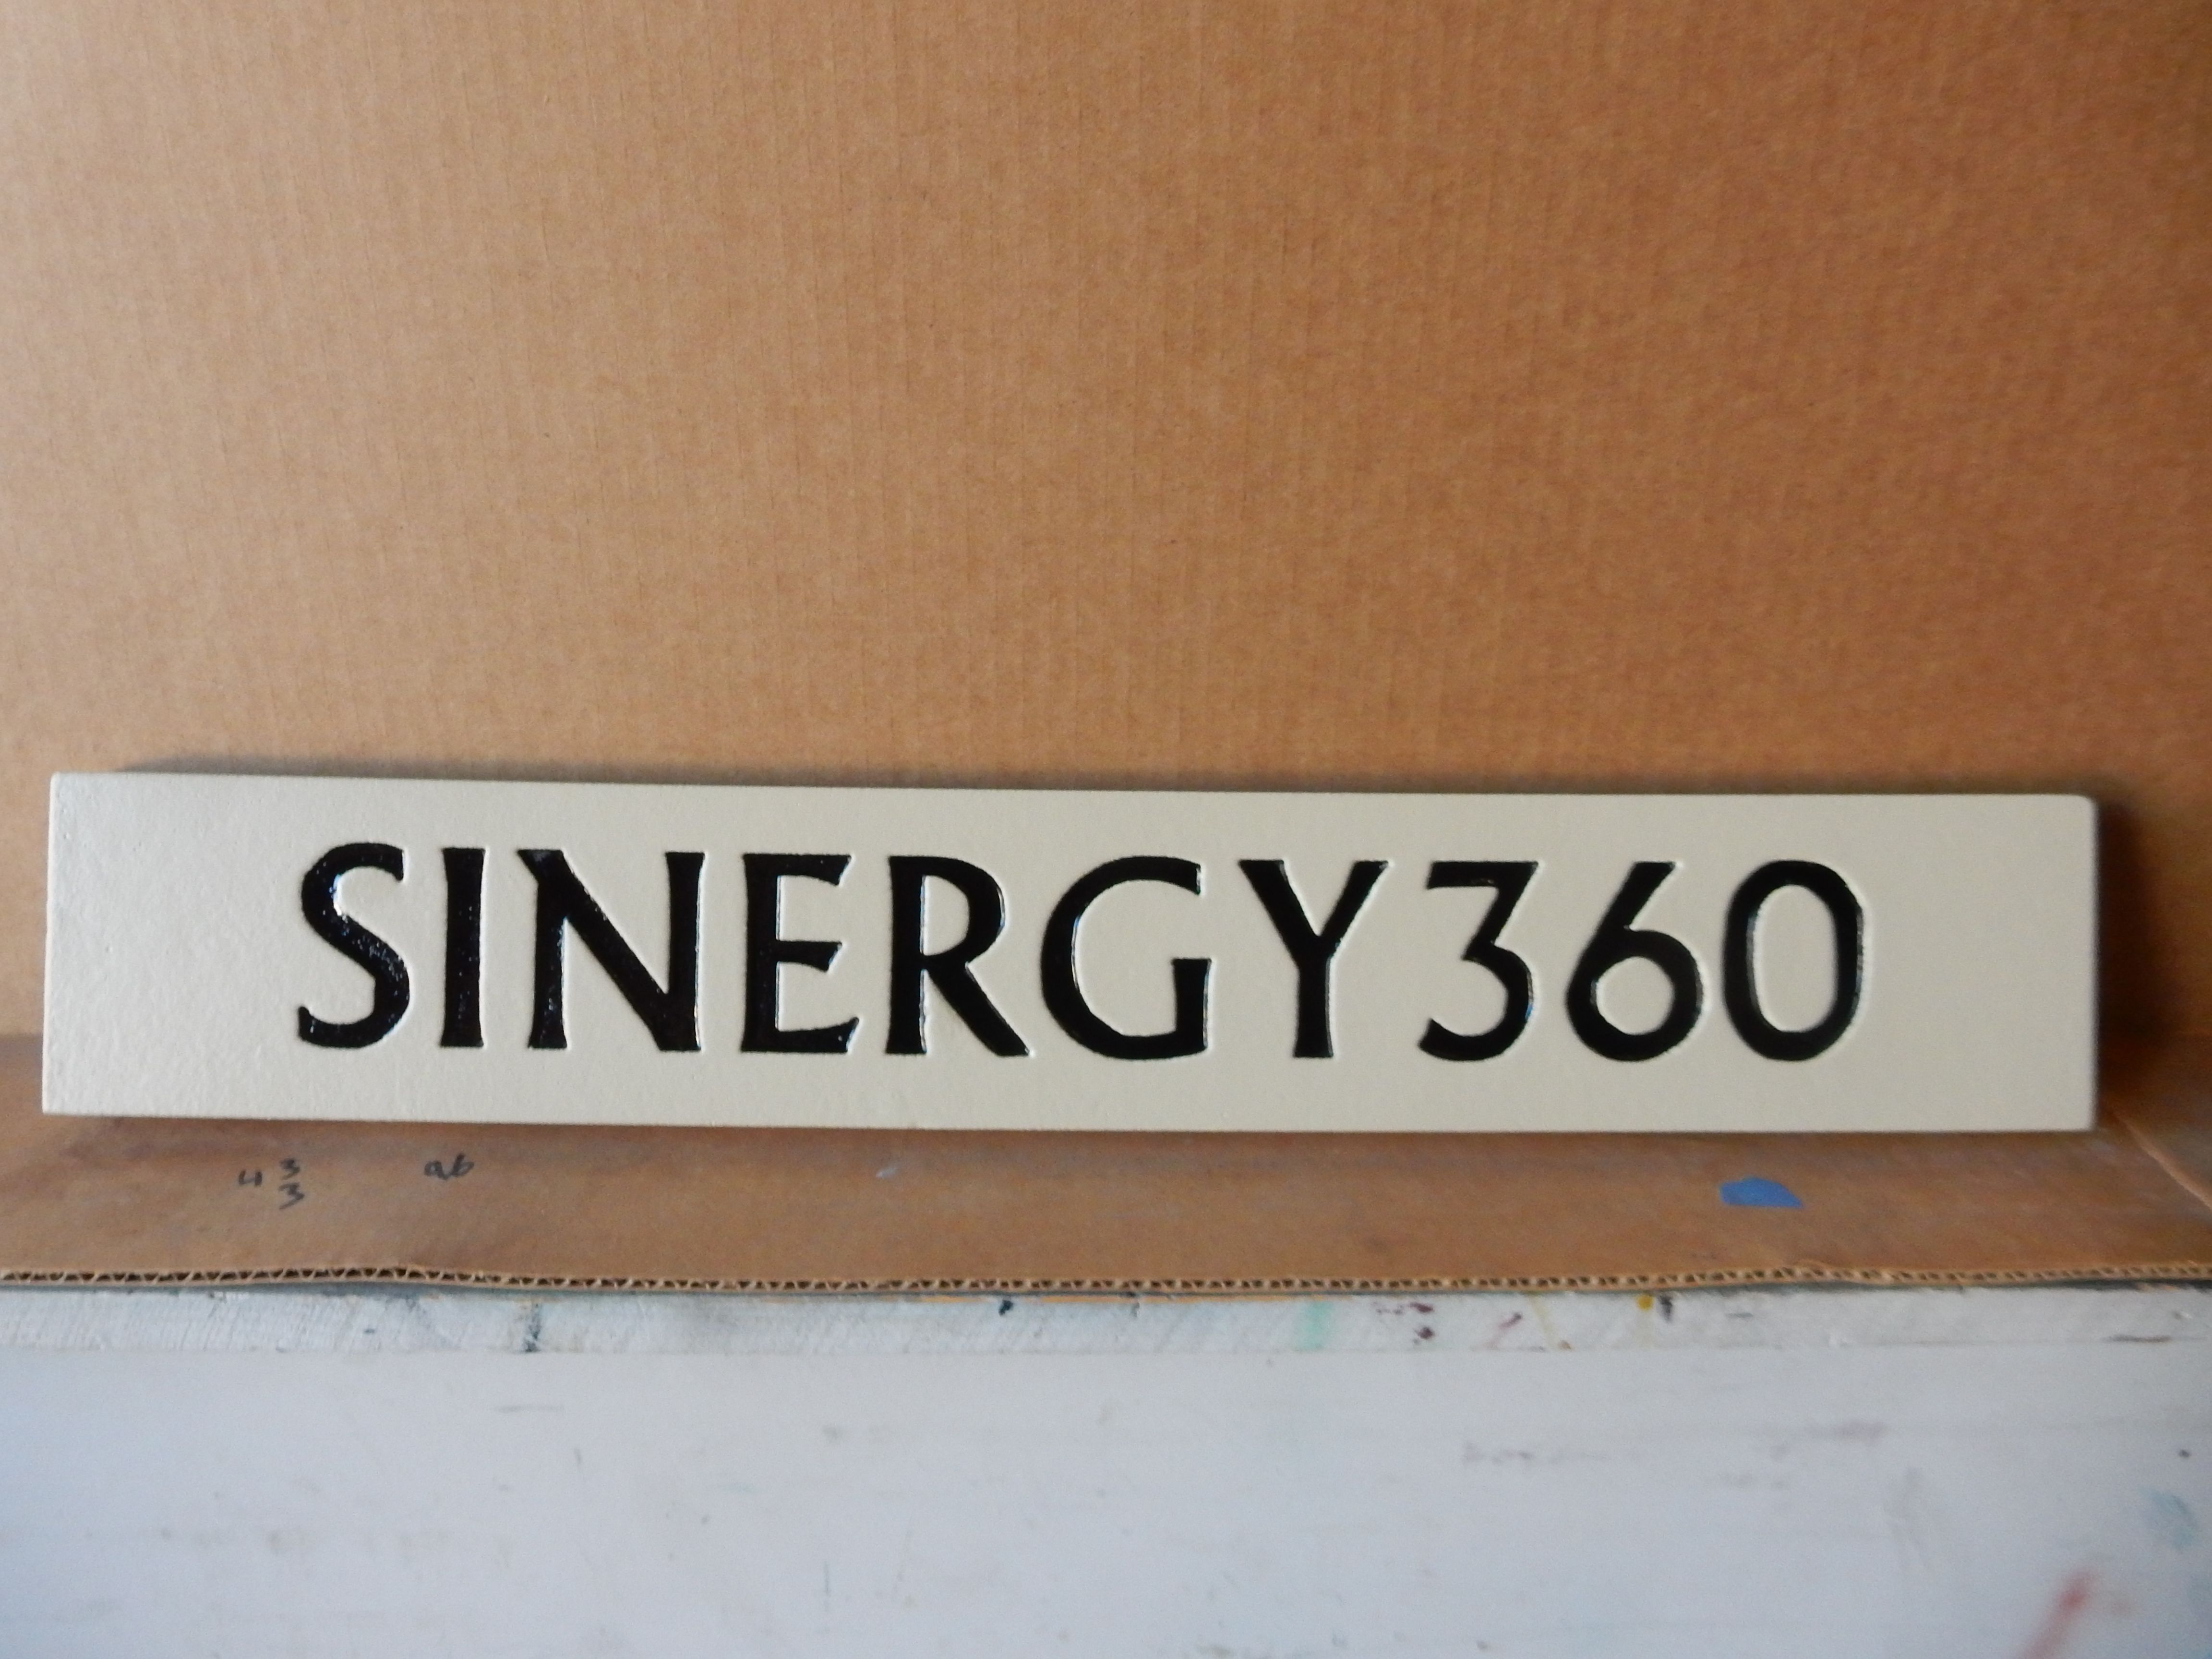 SB28997- Carved and Engraved High-Density-Urethane (HDU) Sign for "Synergy 360"